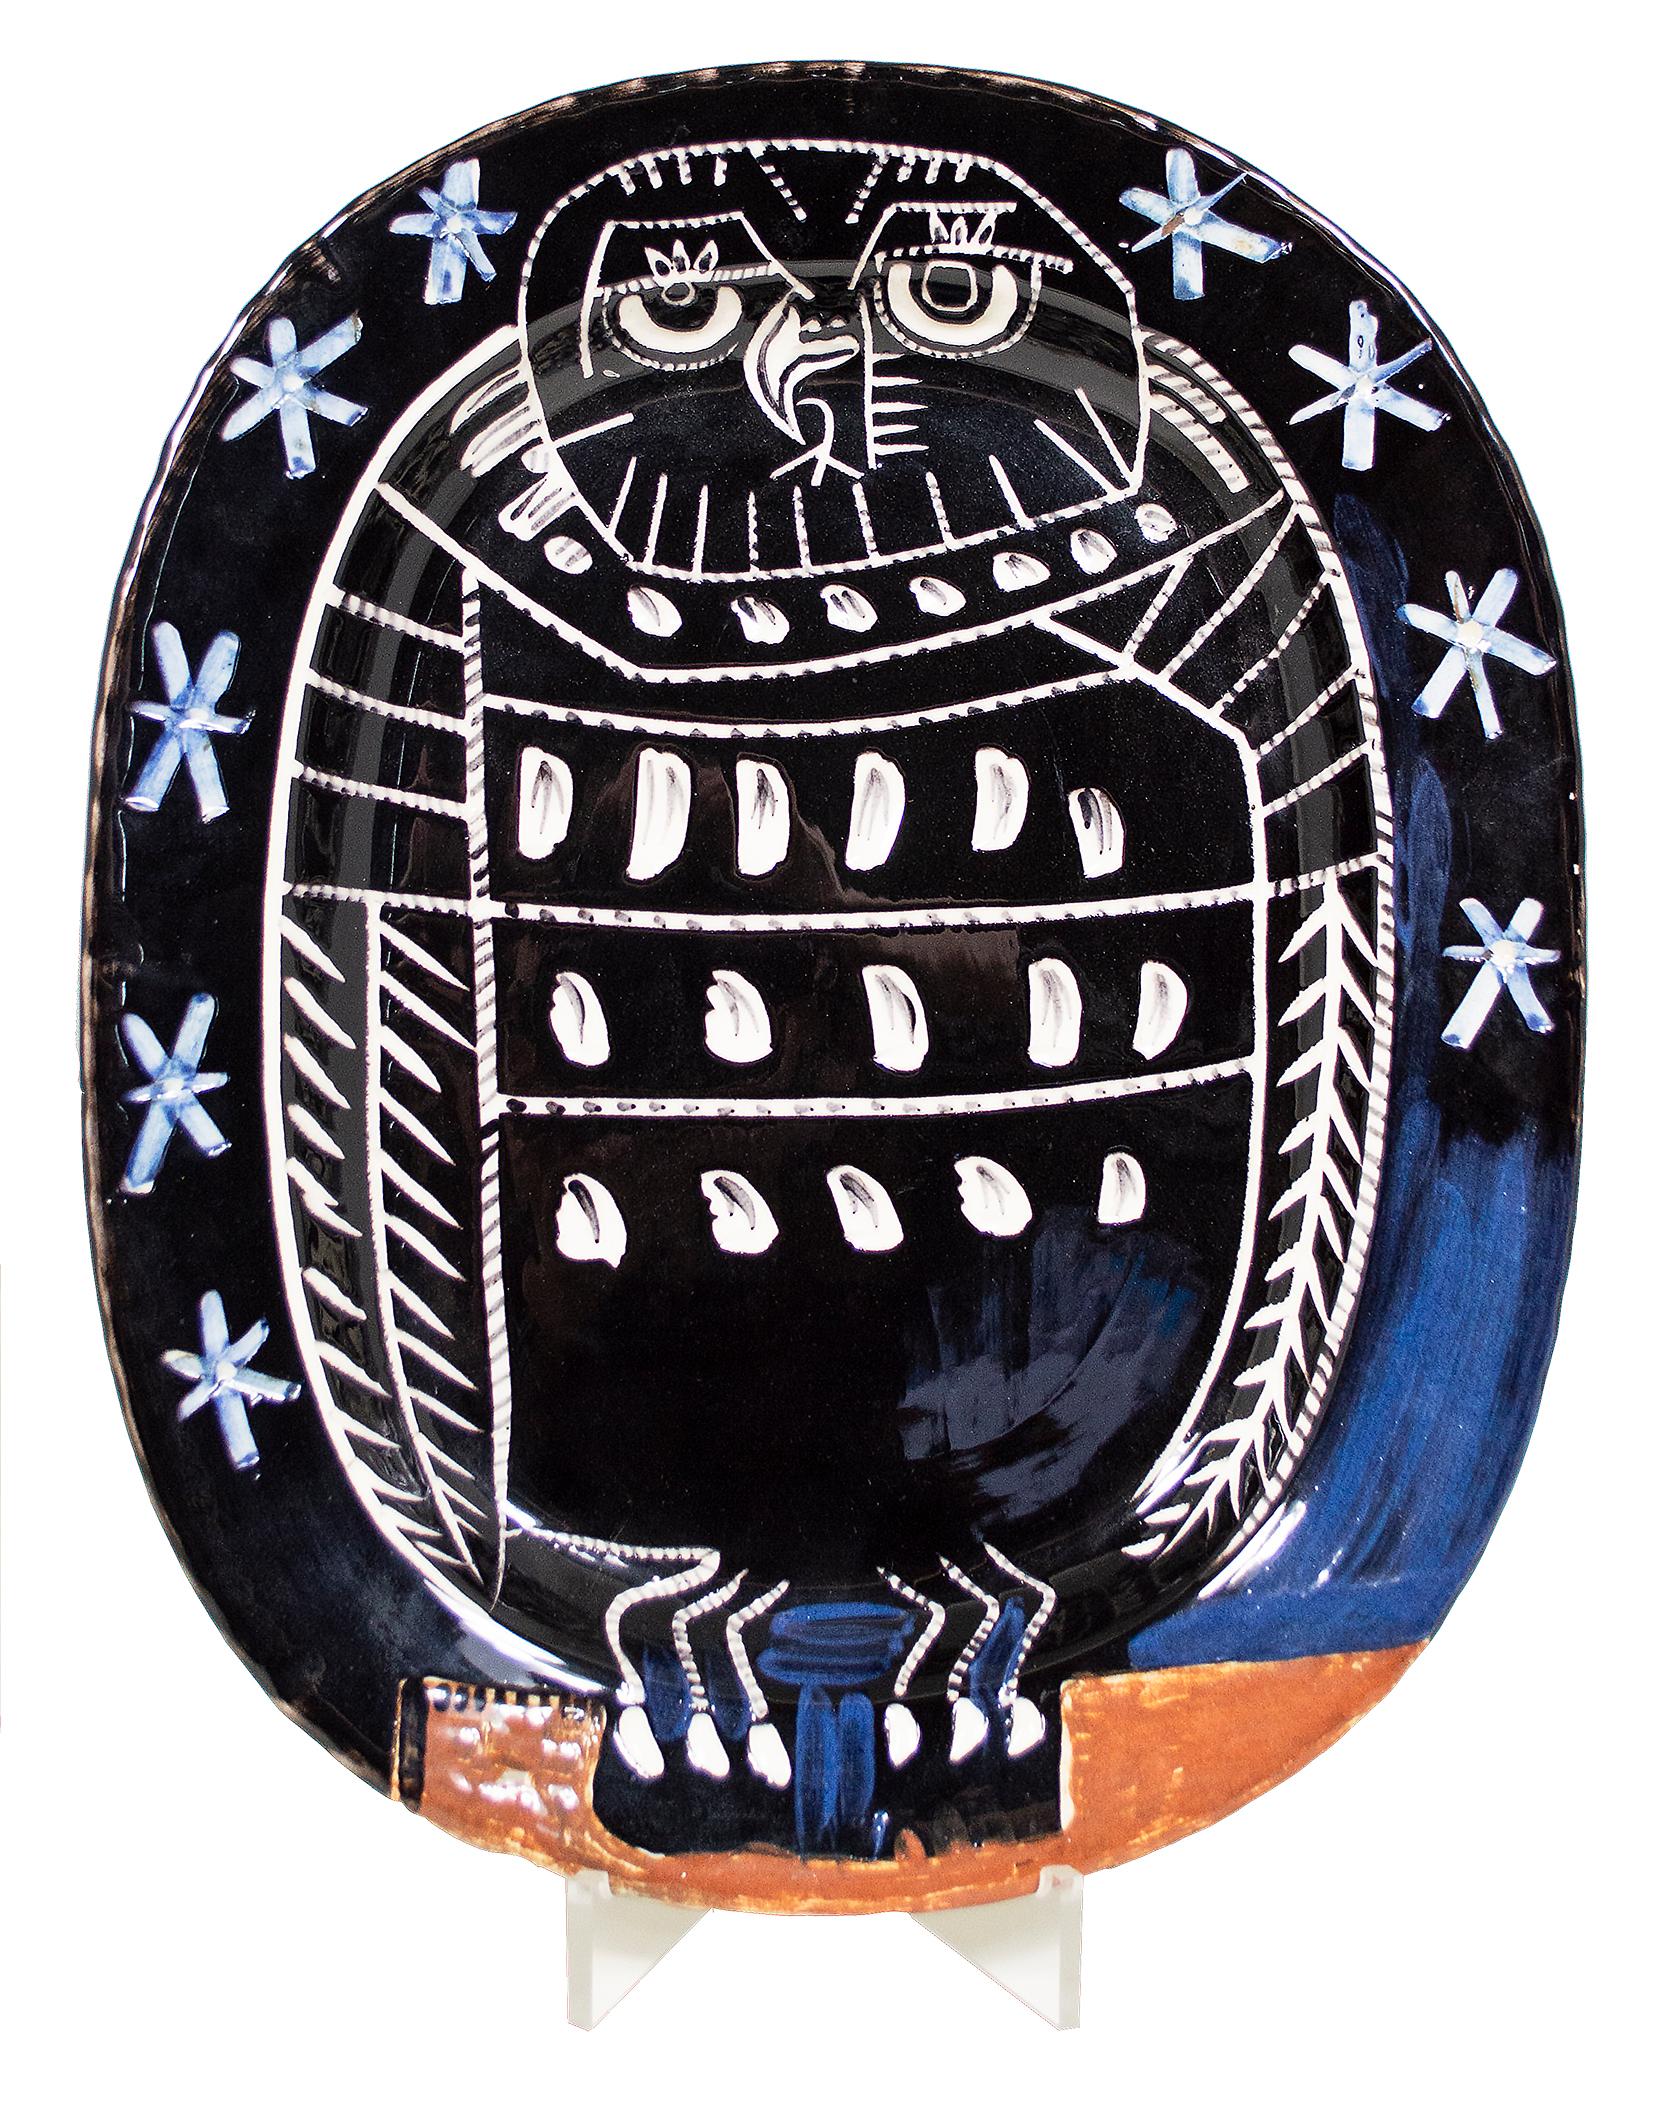 Originale rechteckige Madoura-Keramik-Platte „Bright Owl“ aus Madoura, Edition Picasso – Art von Pablo Picasso